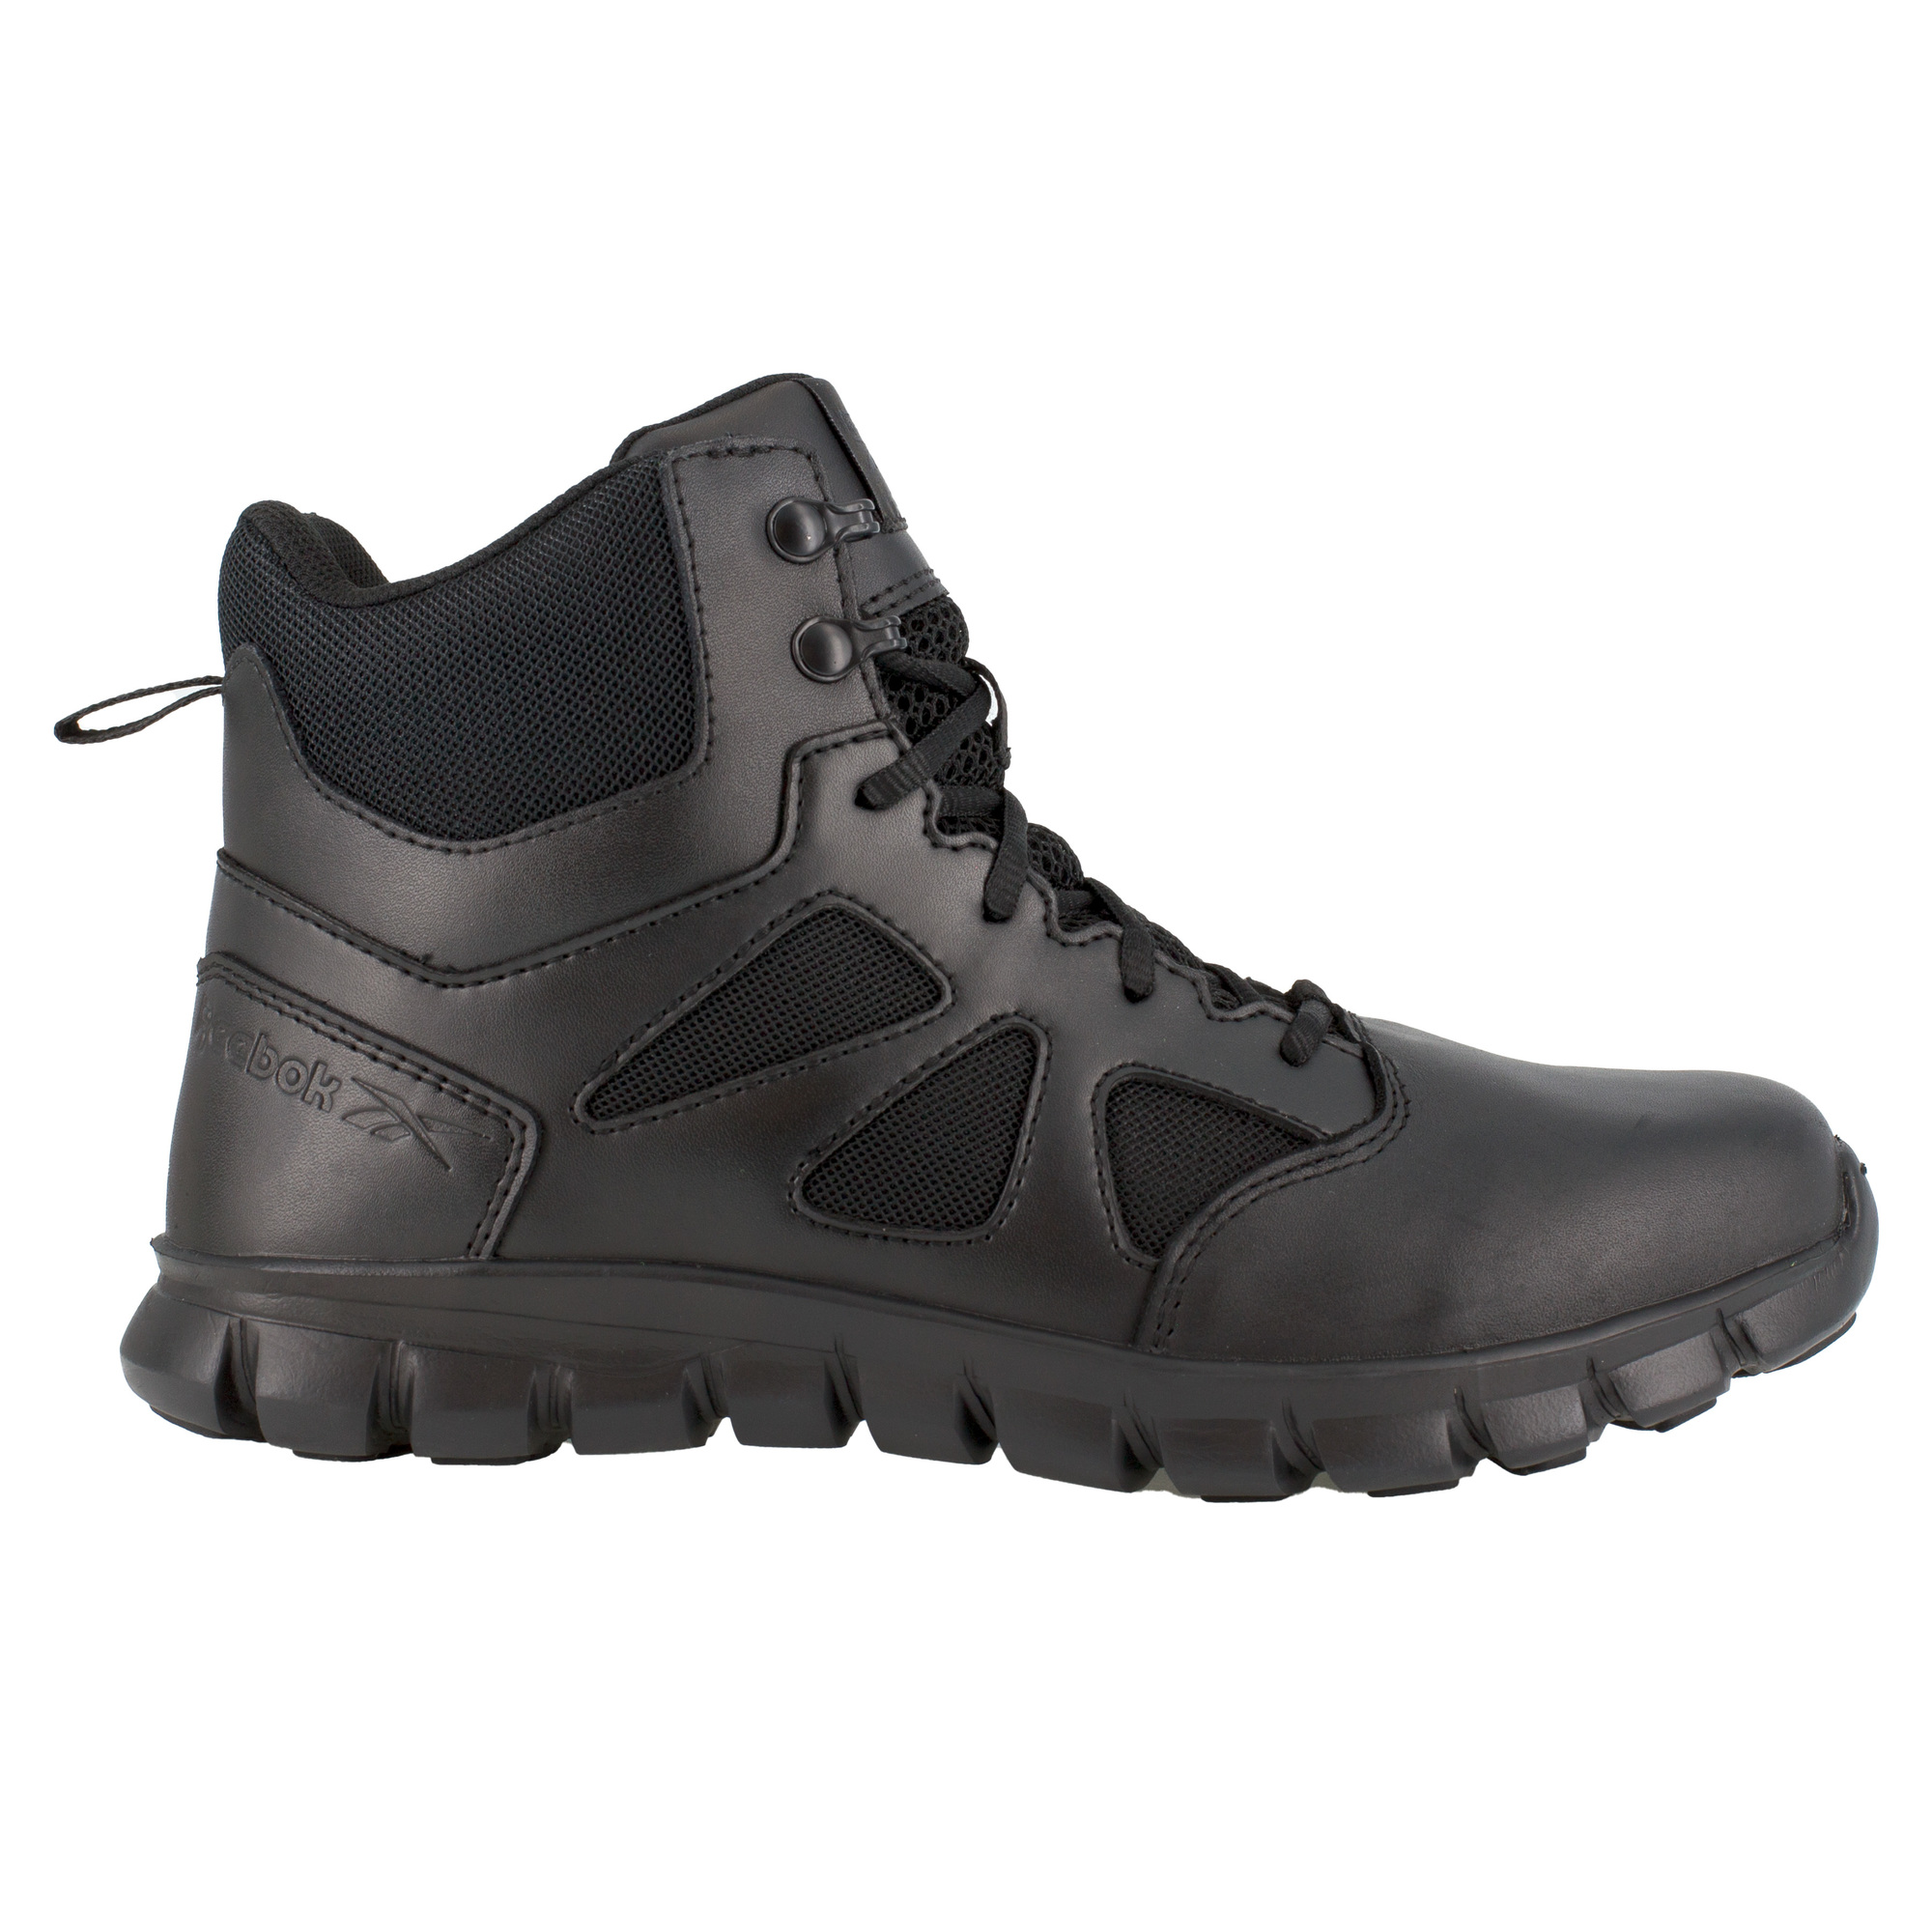 Reebok, 6Inch Tactical Boot w/Side Zipper, Size 7 1/2, Width Medium, Color Black, Model RB086